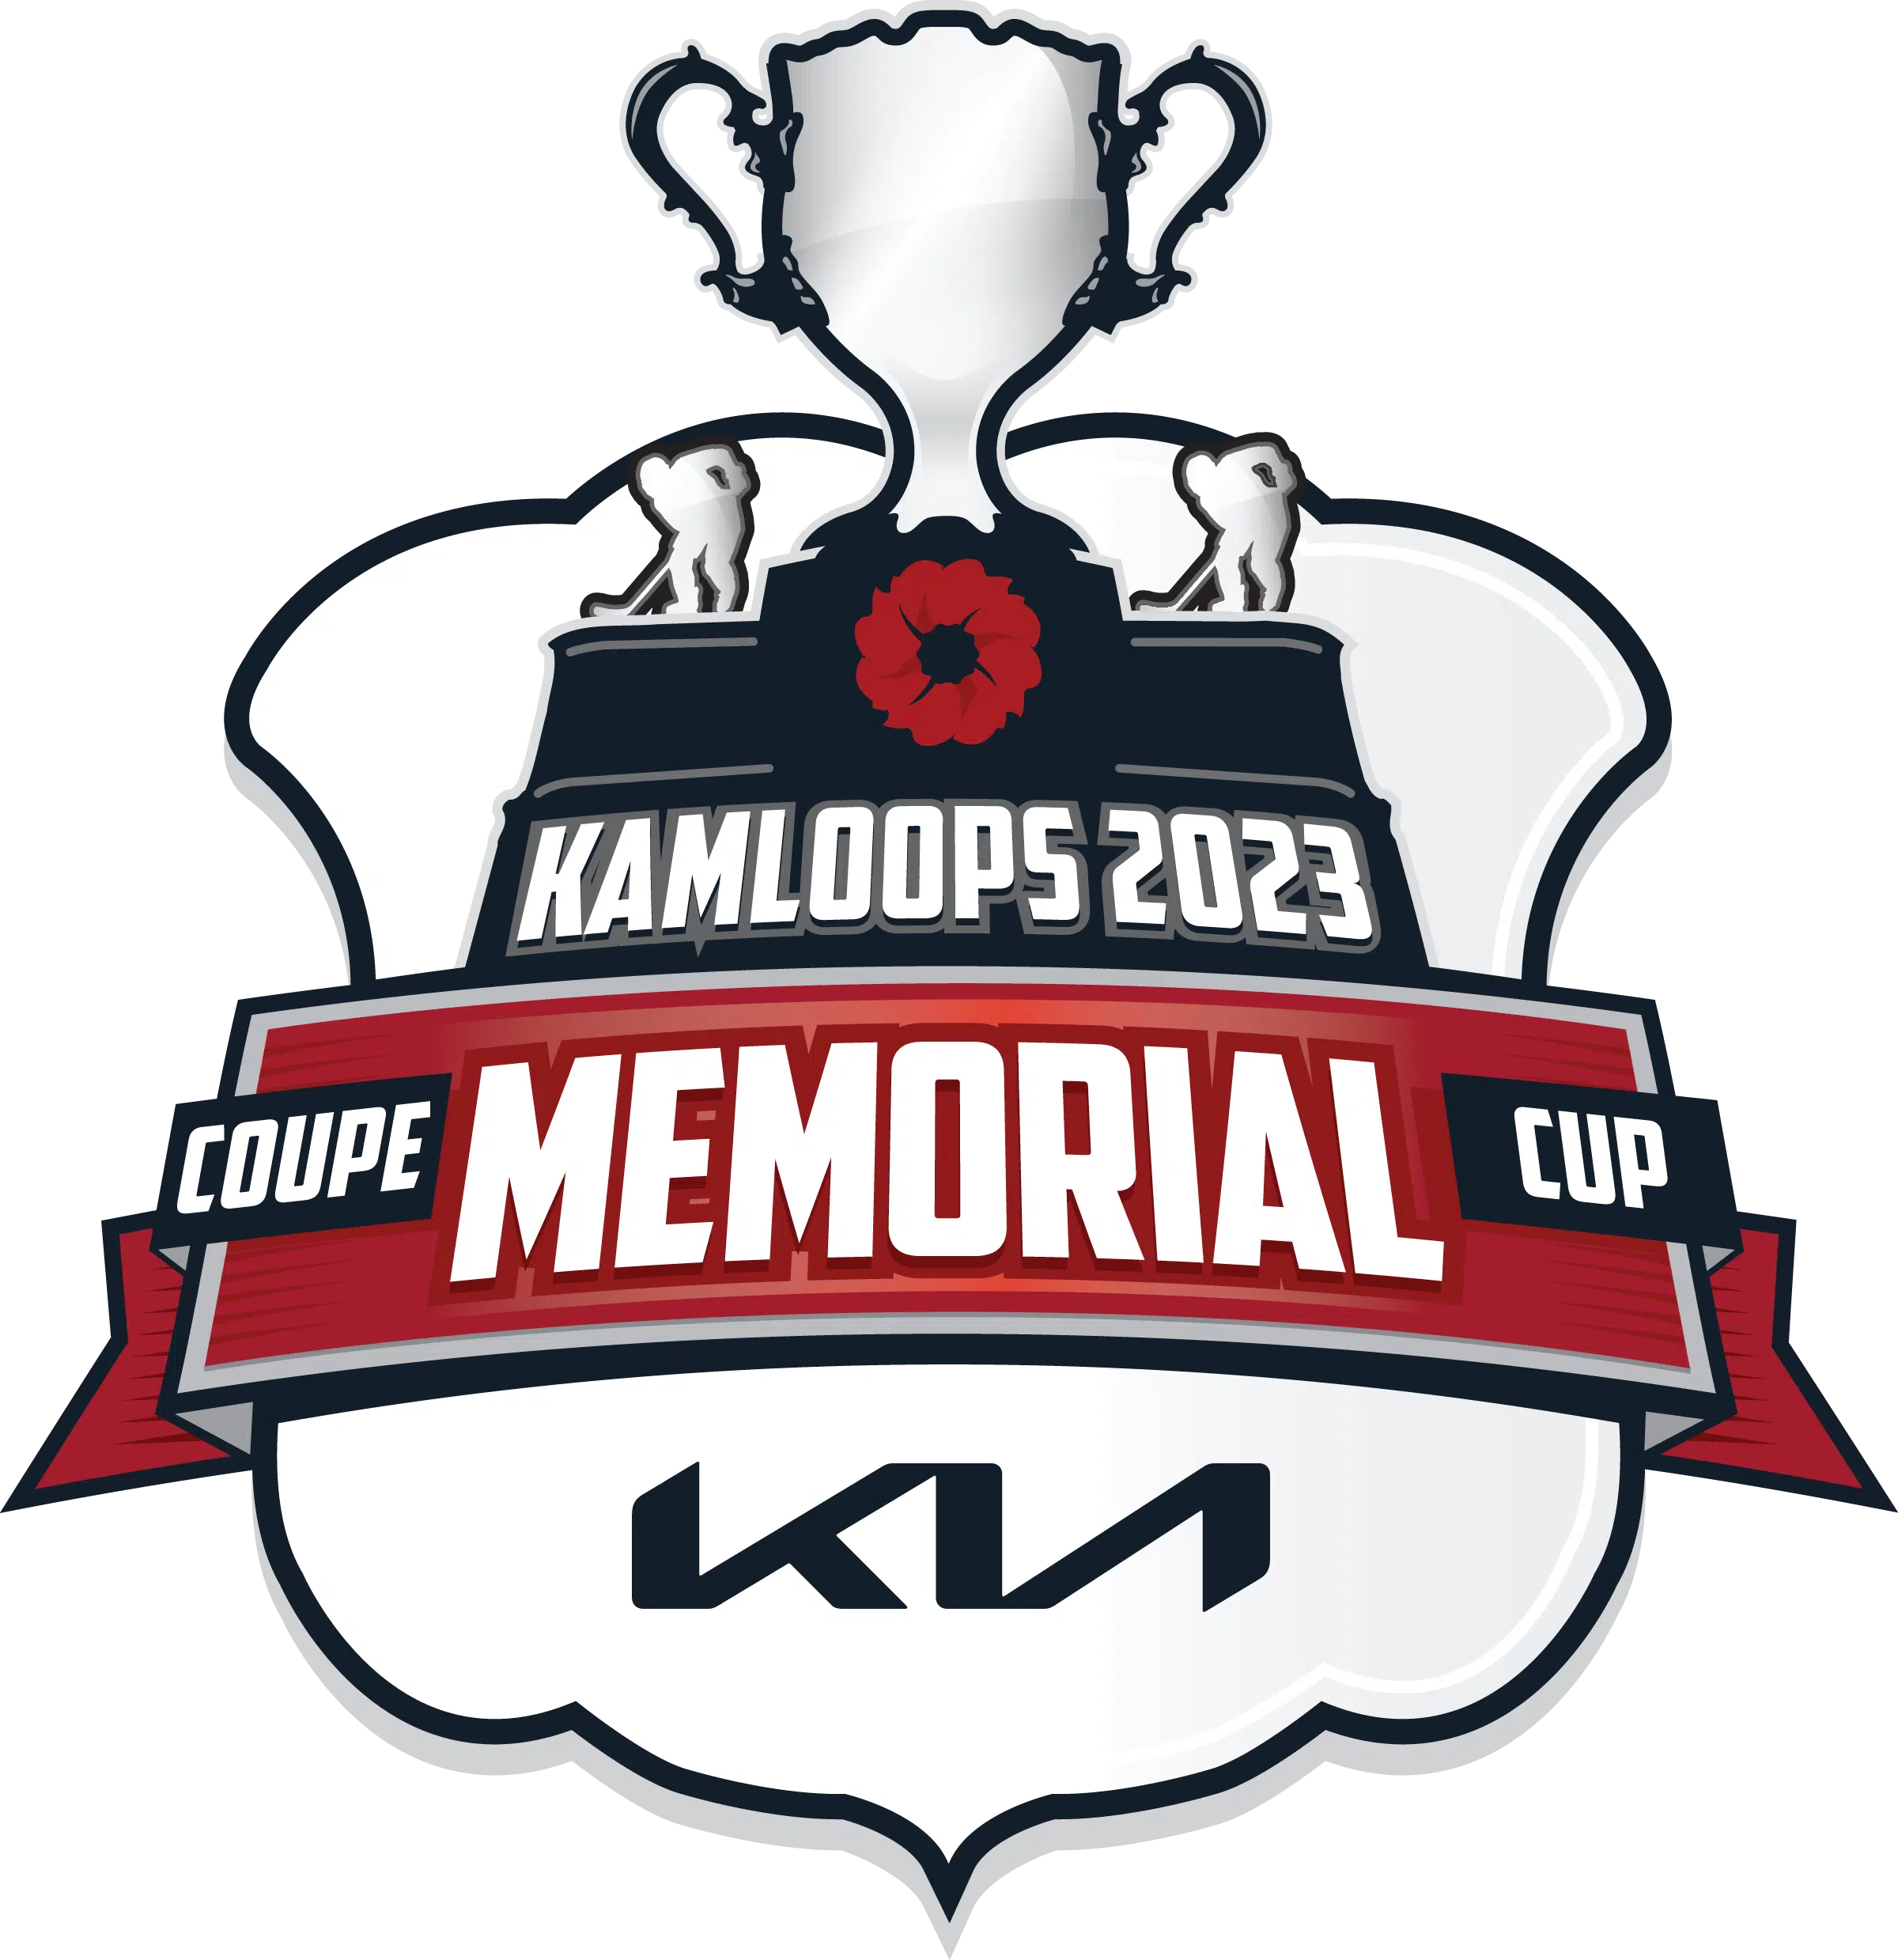 Memorial Cup field set for 2023 tournament in Kamloops